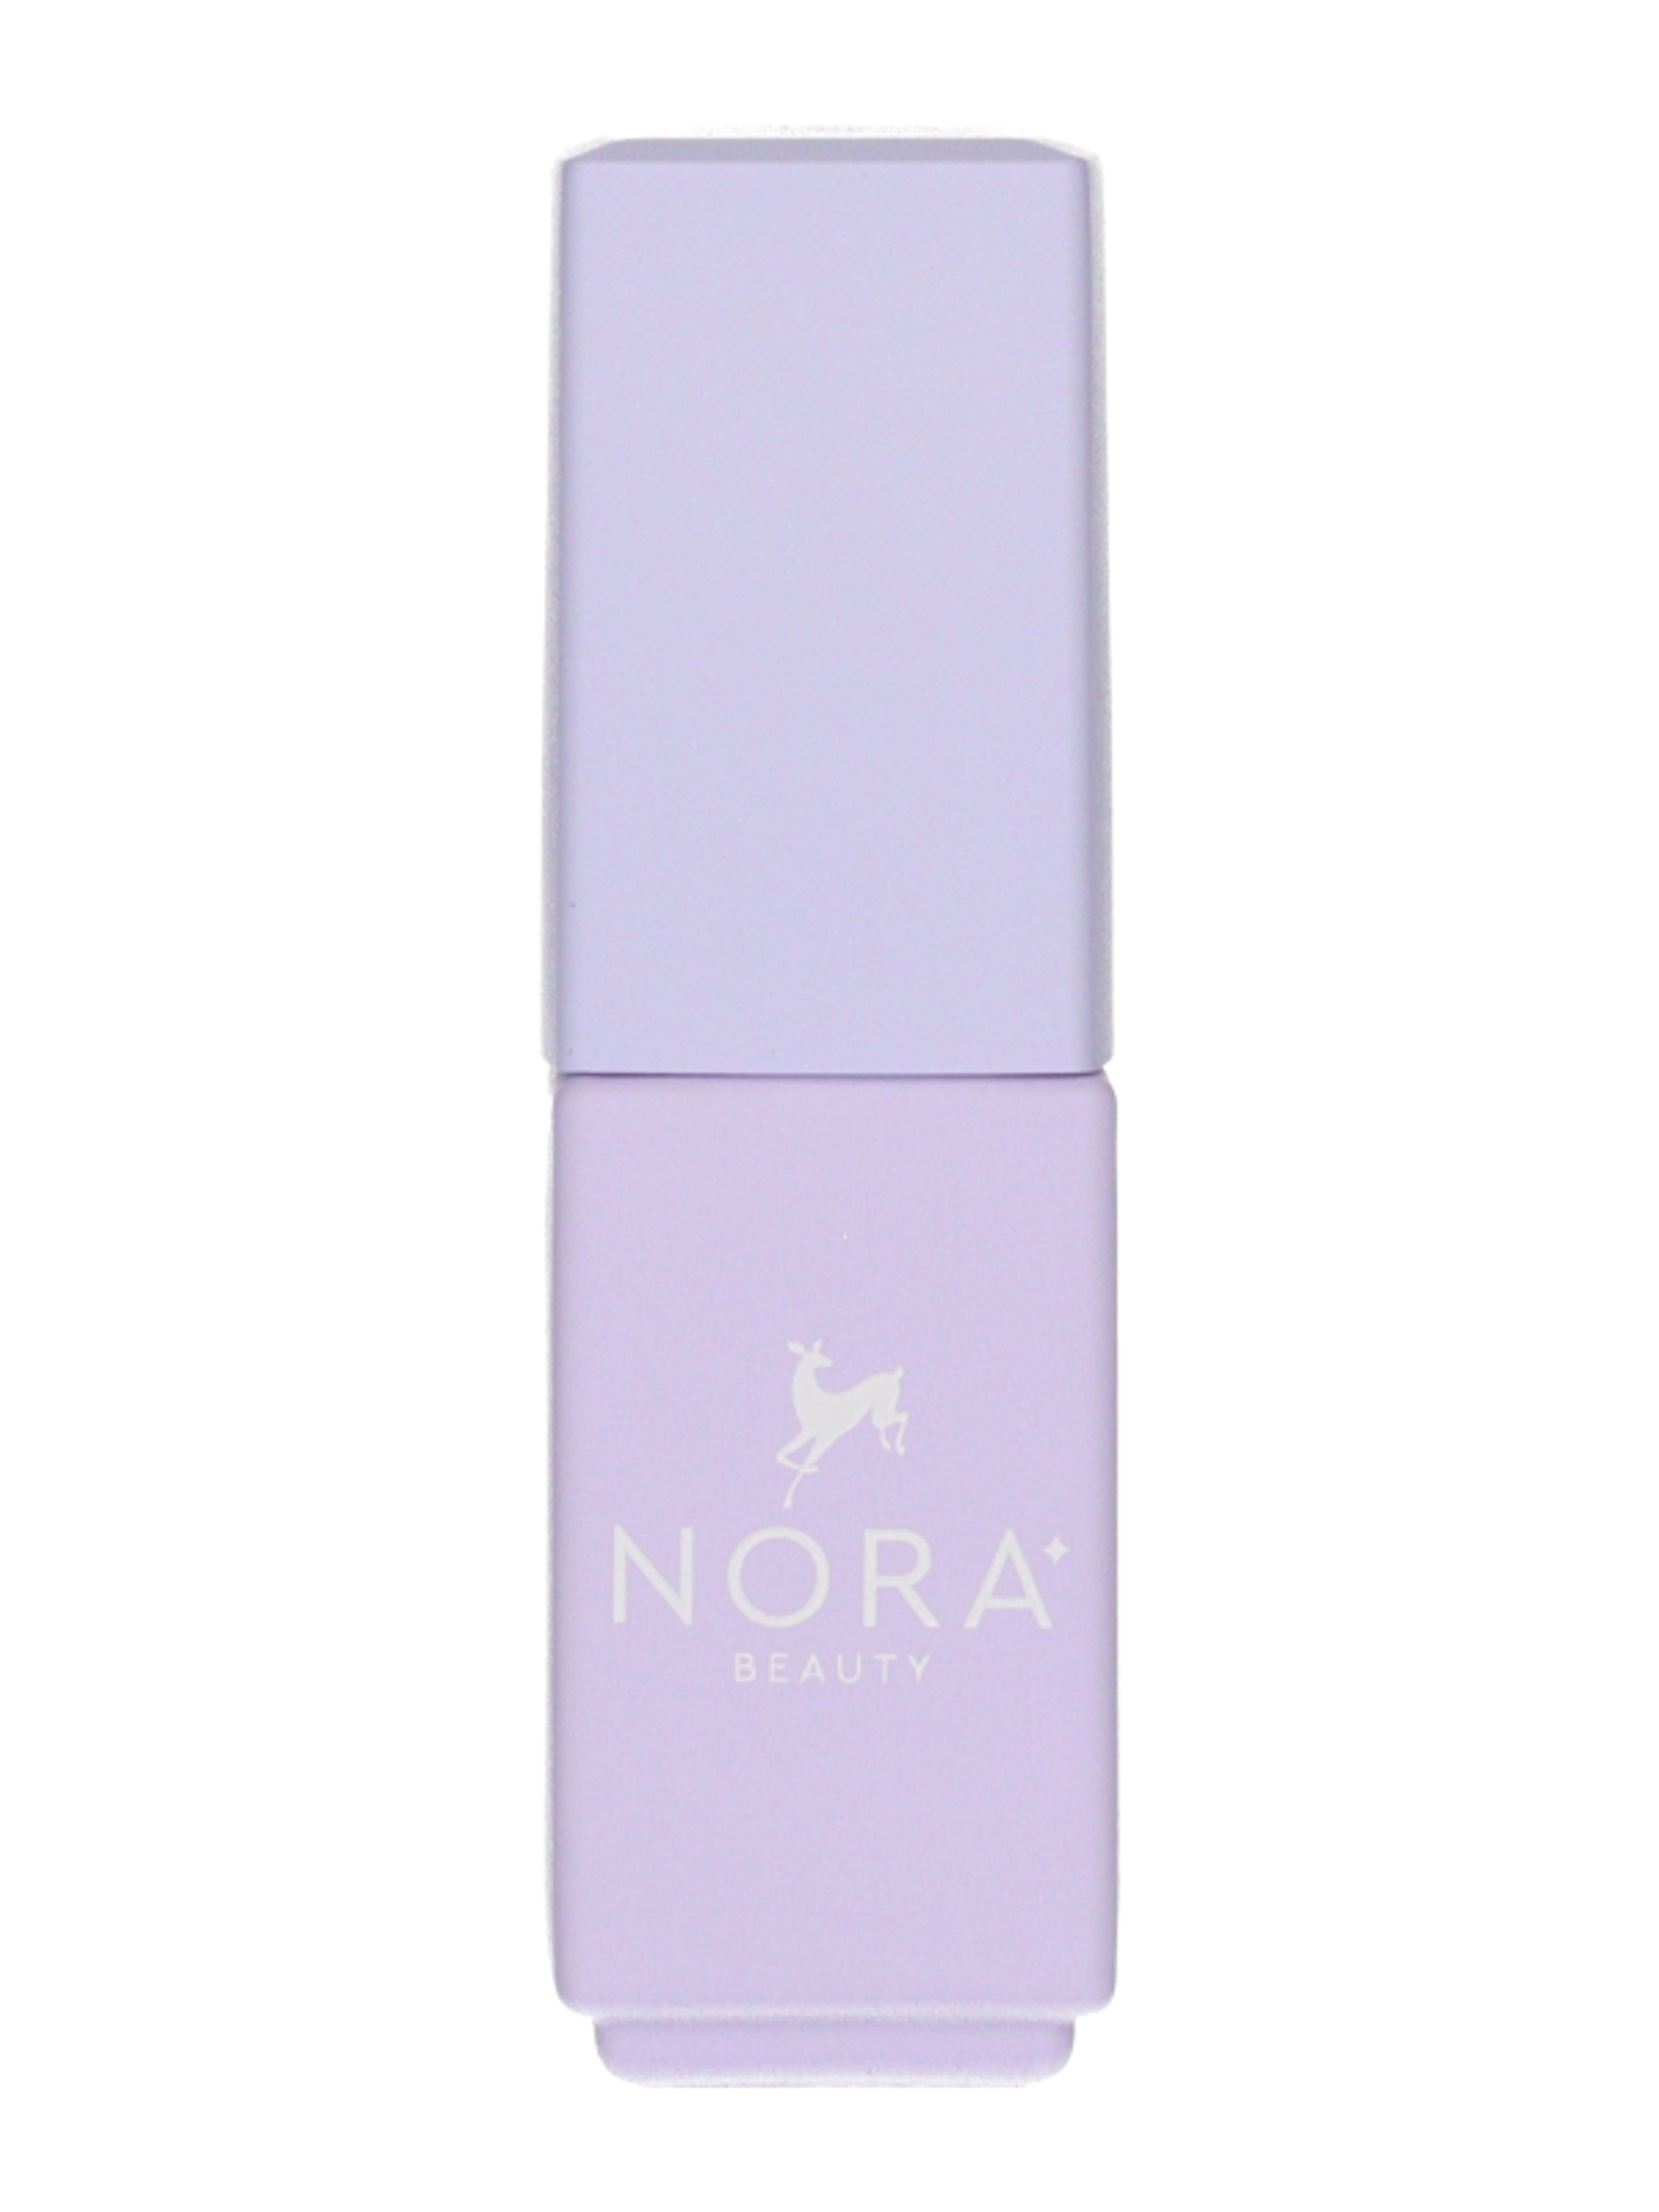 Nora Beauty UV lakkzselé /se-02 stylish french - 1 db-3